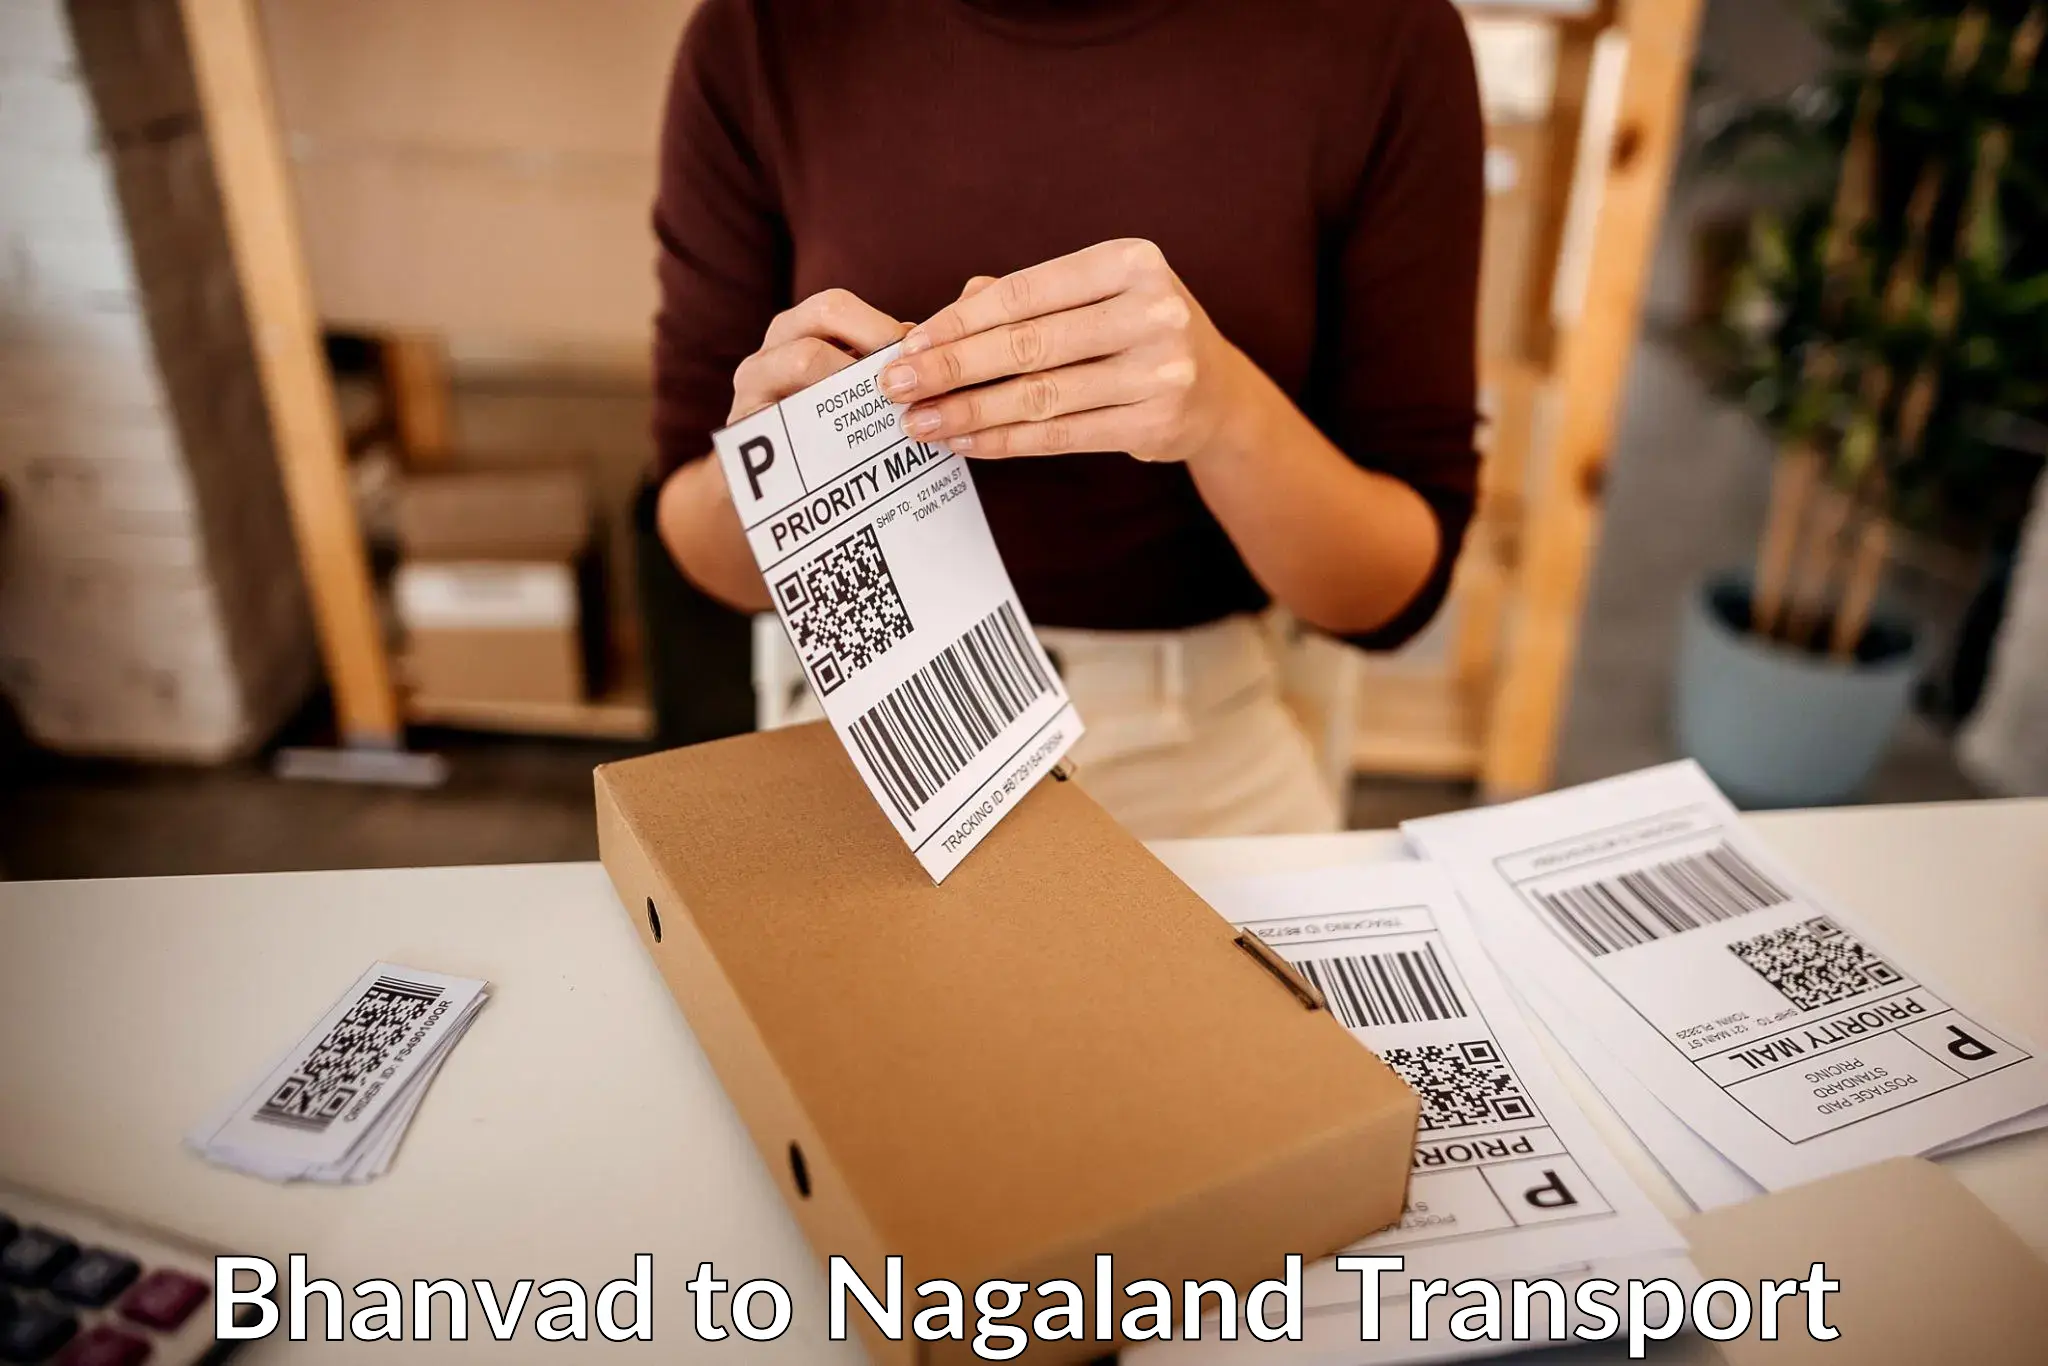 Lorry transport service Bhanvad to Nagaland